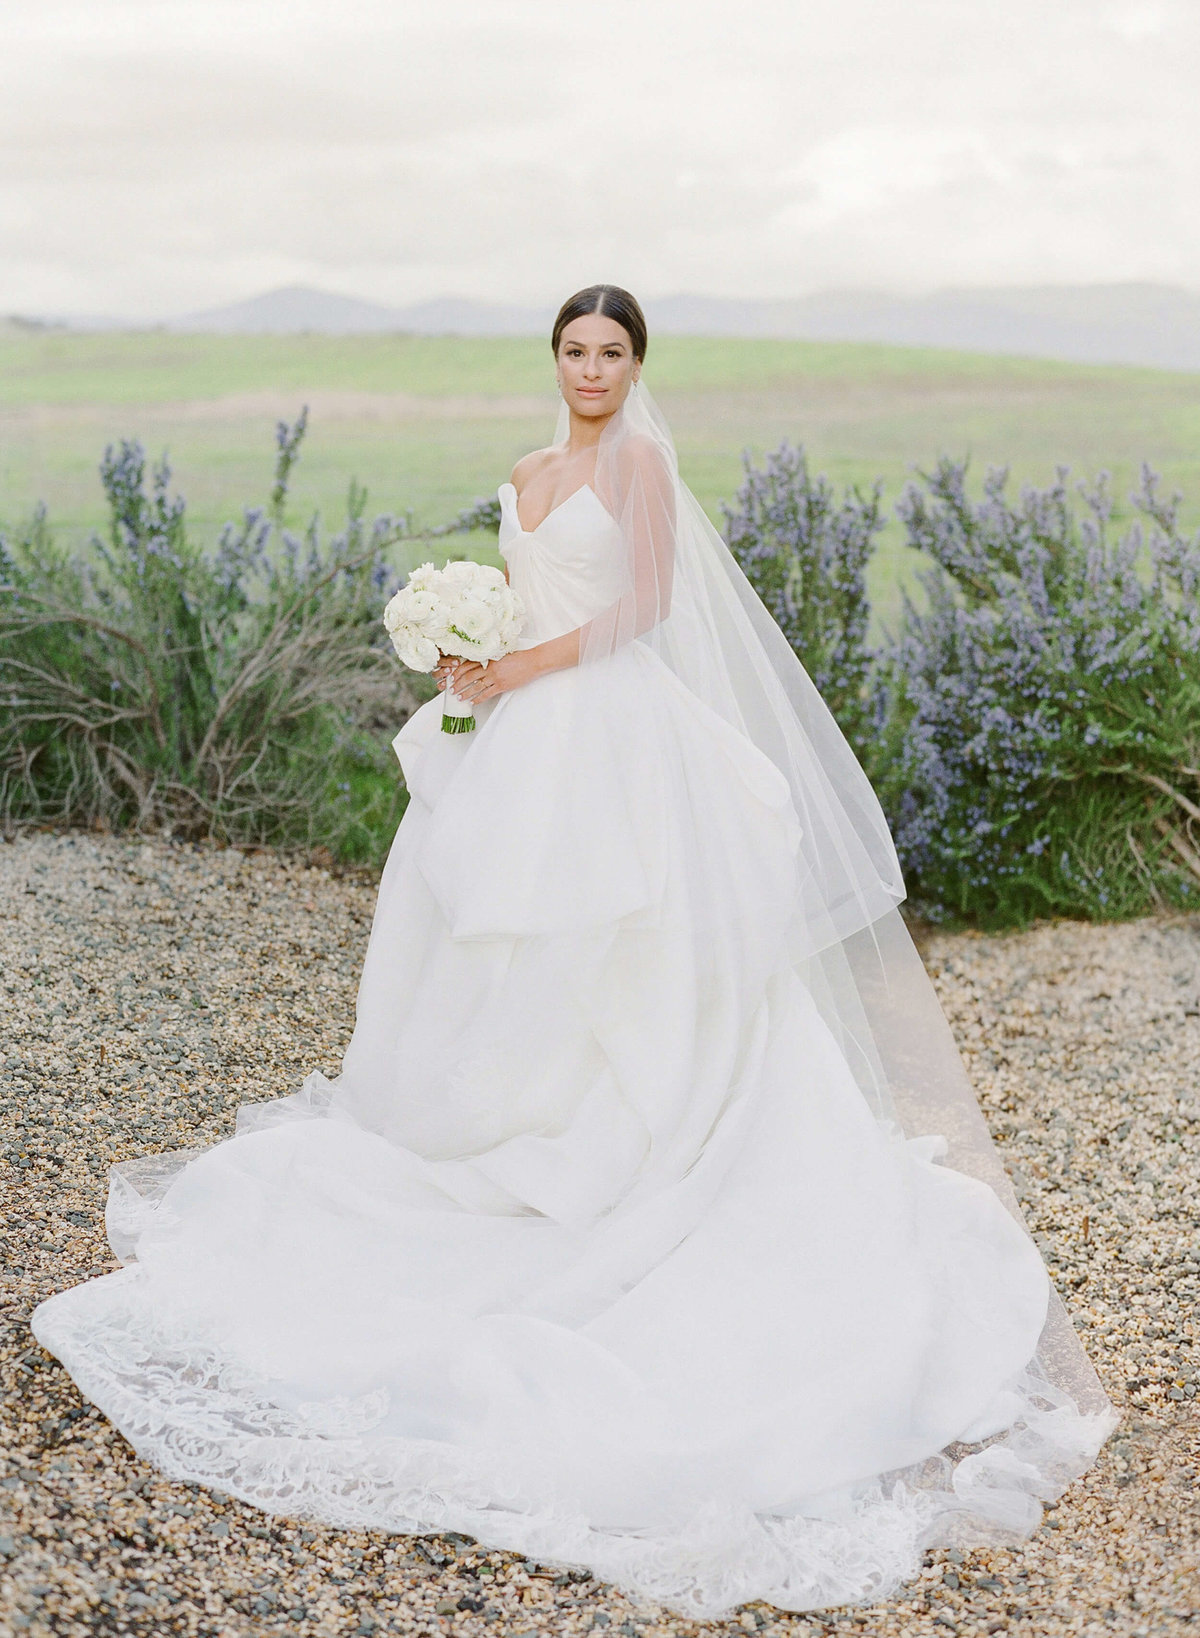 34-KTMerry-weddings-Lea-Michele-bridal-portrait